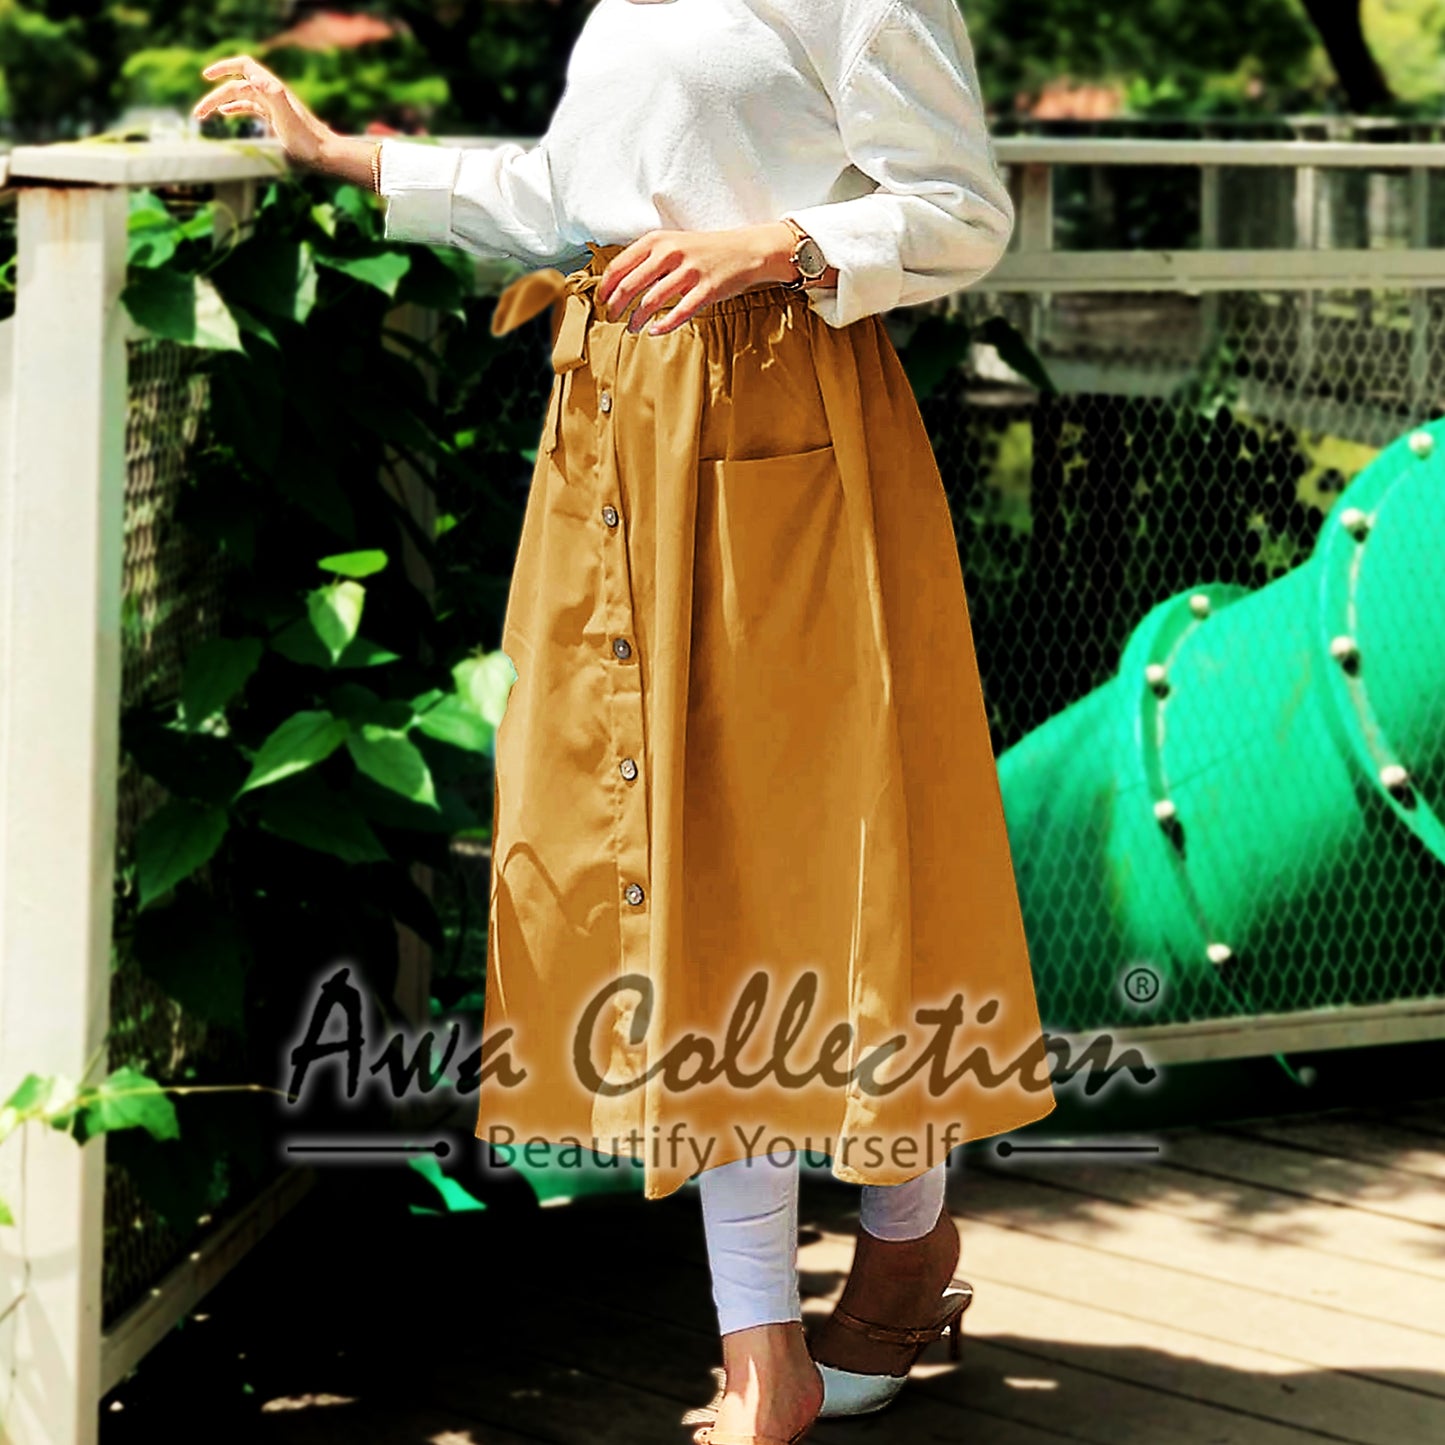 LALEESA Awa Collection BA507547 SKIRT RANIA Button Through Belted Paperbag Skirt Muslimah Skirt Labuh Skirt Pencil